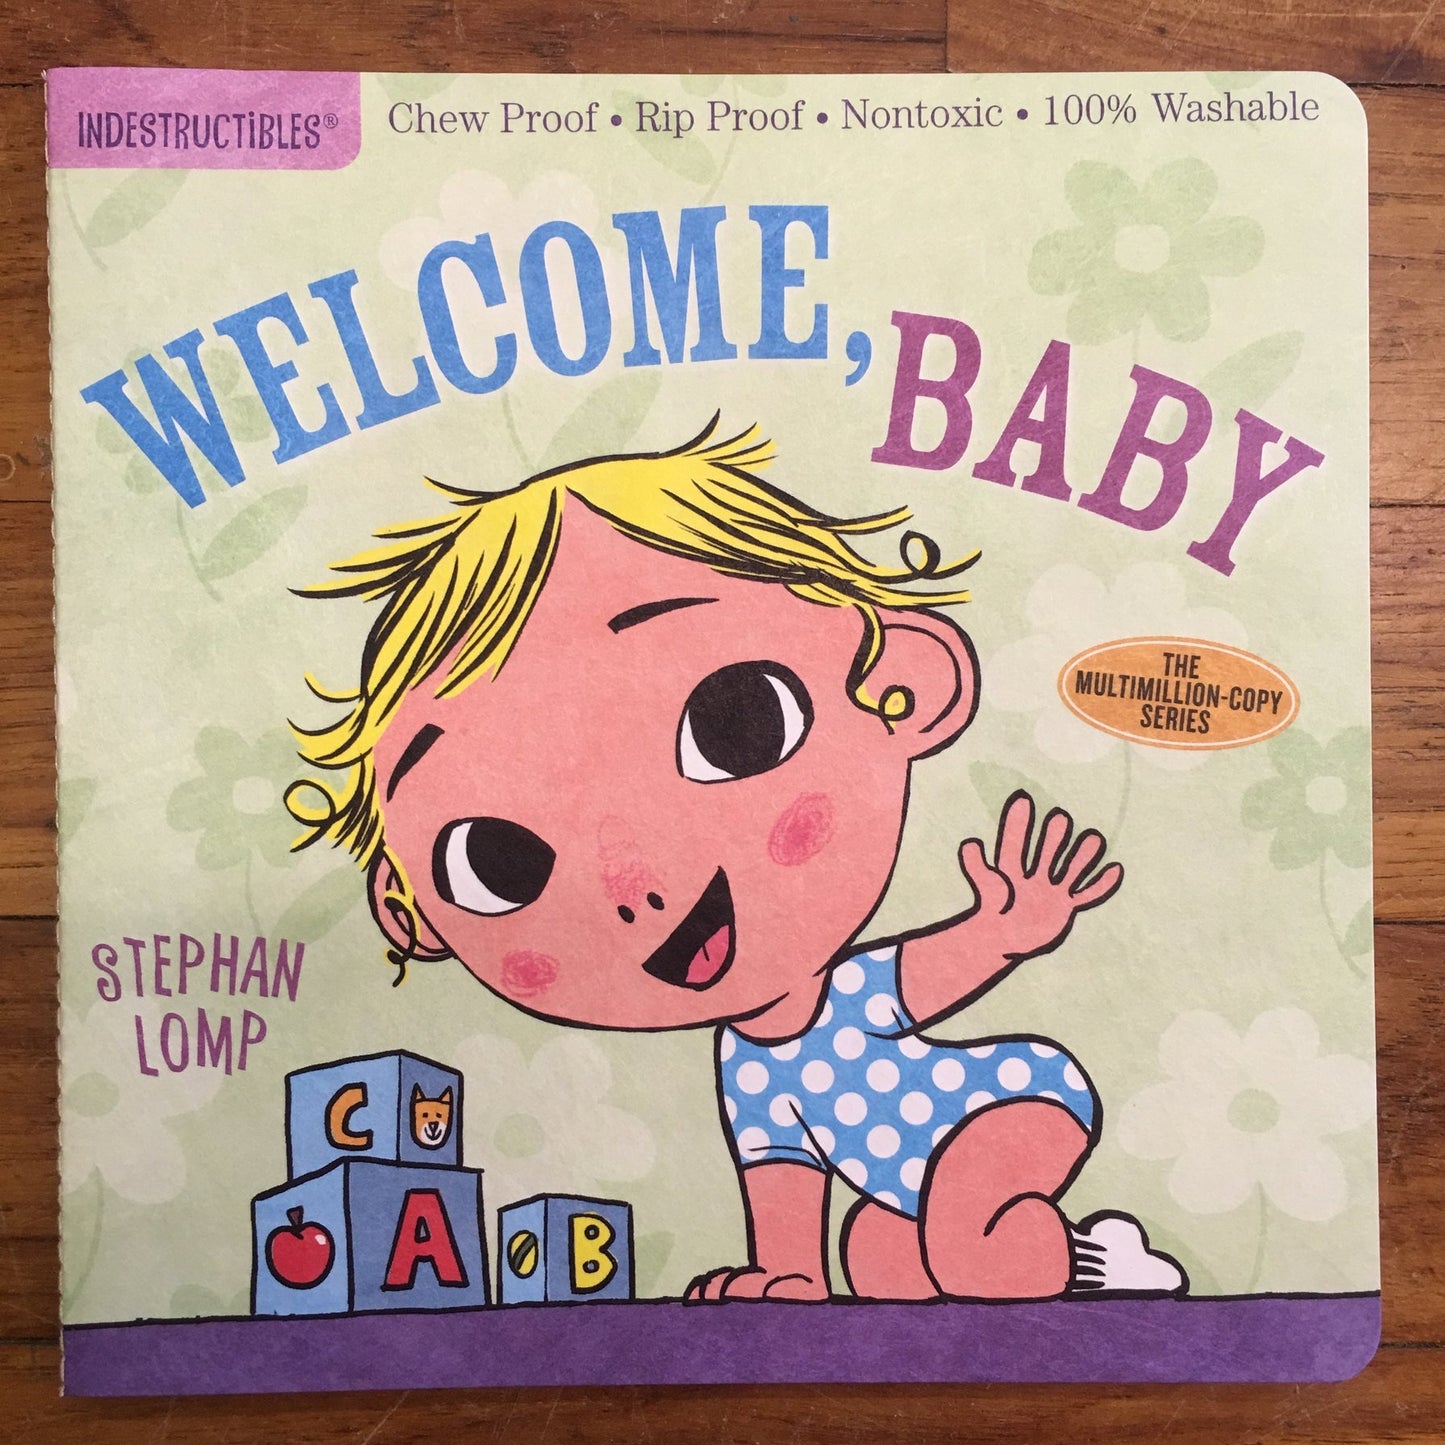 INDESTRUCTIBLES CHILDREN BOOK/WELCOME BABY